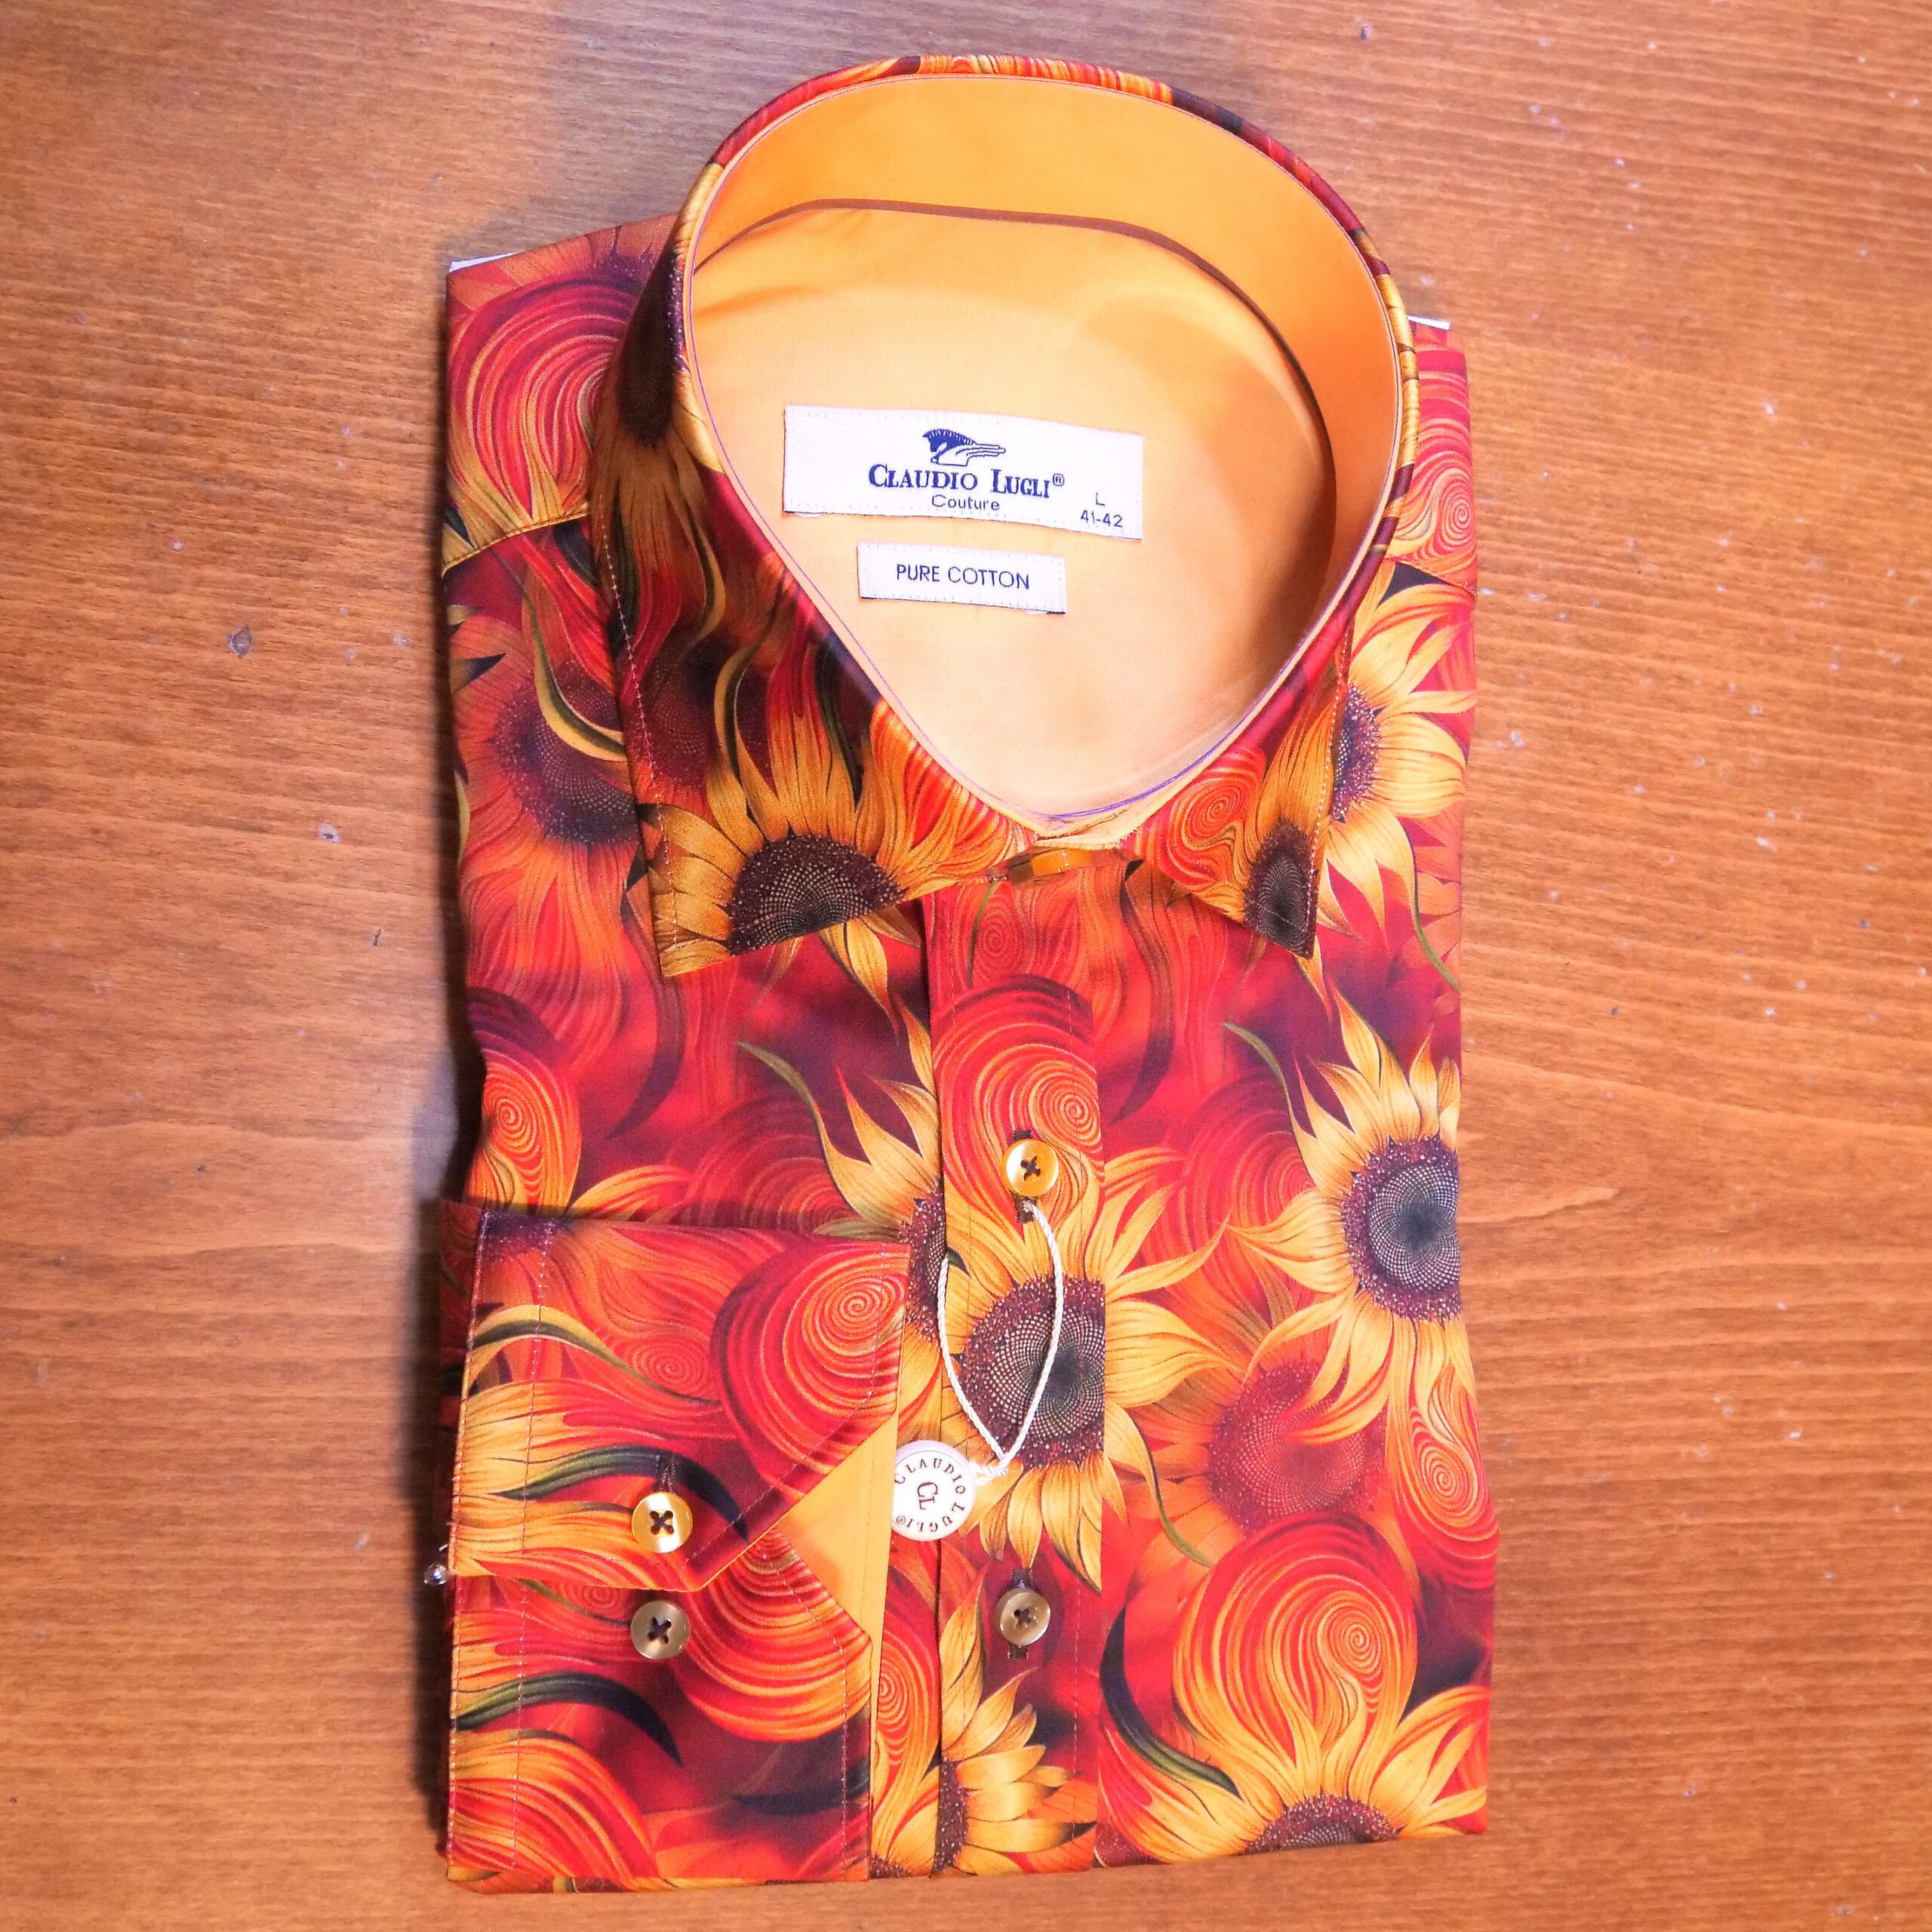 Claudio Lugli shirt with sunflowers on an orange swirl background with ...